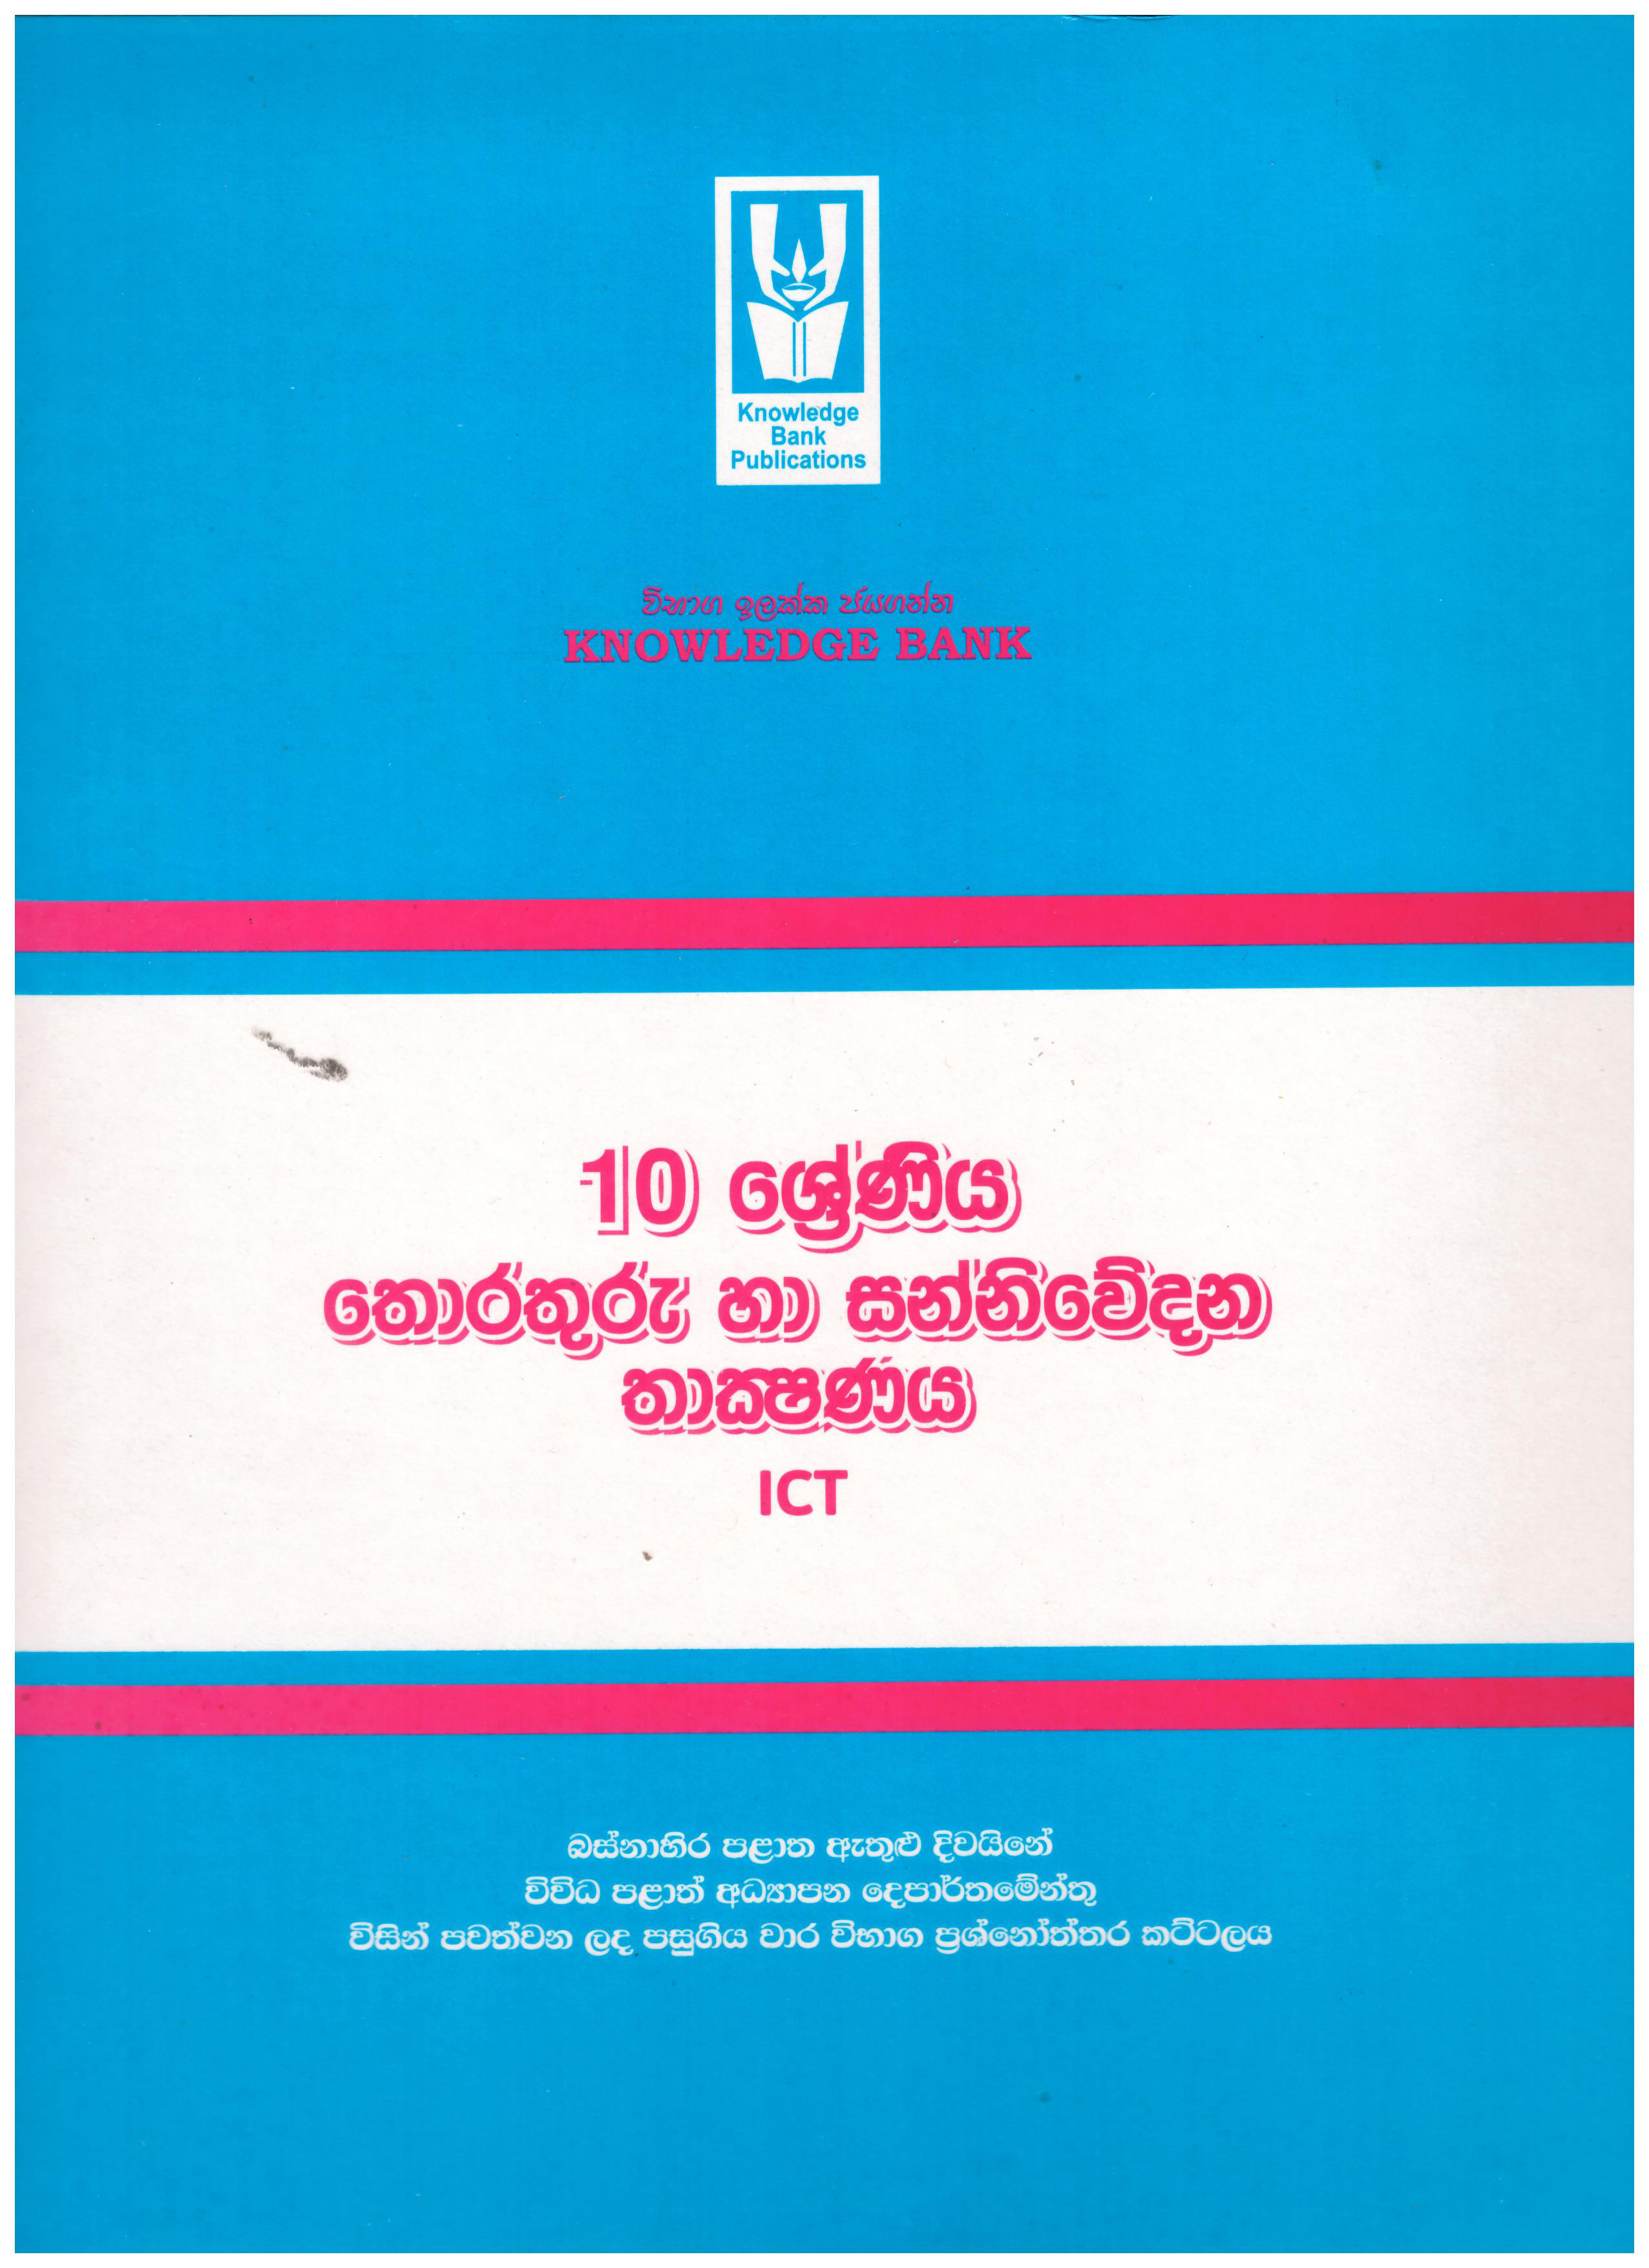 Knowledge Bank Grade 10 Thorathuru Ha Sanniwedana Thakshanaya ( Provincial Examination Papers )